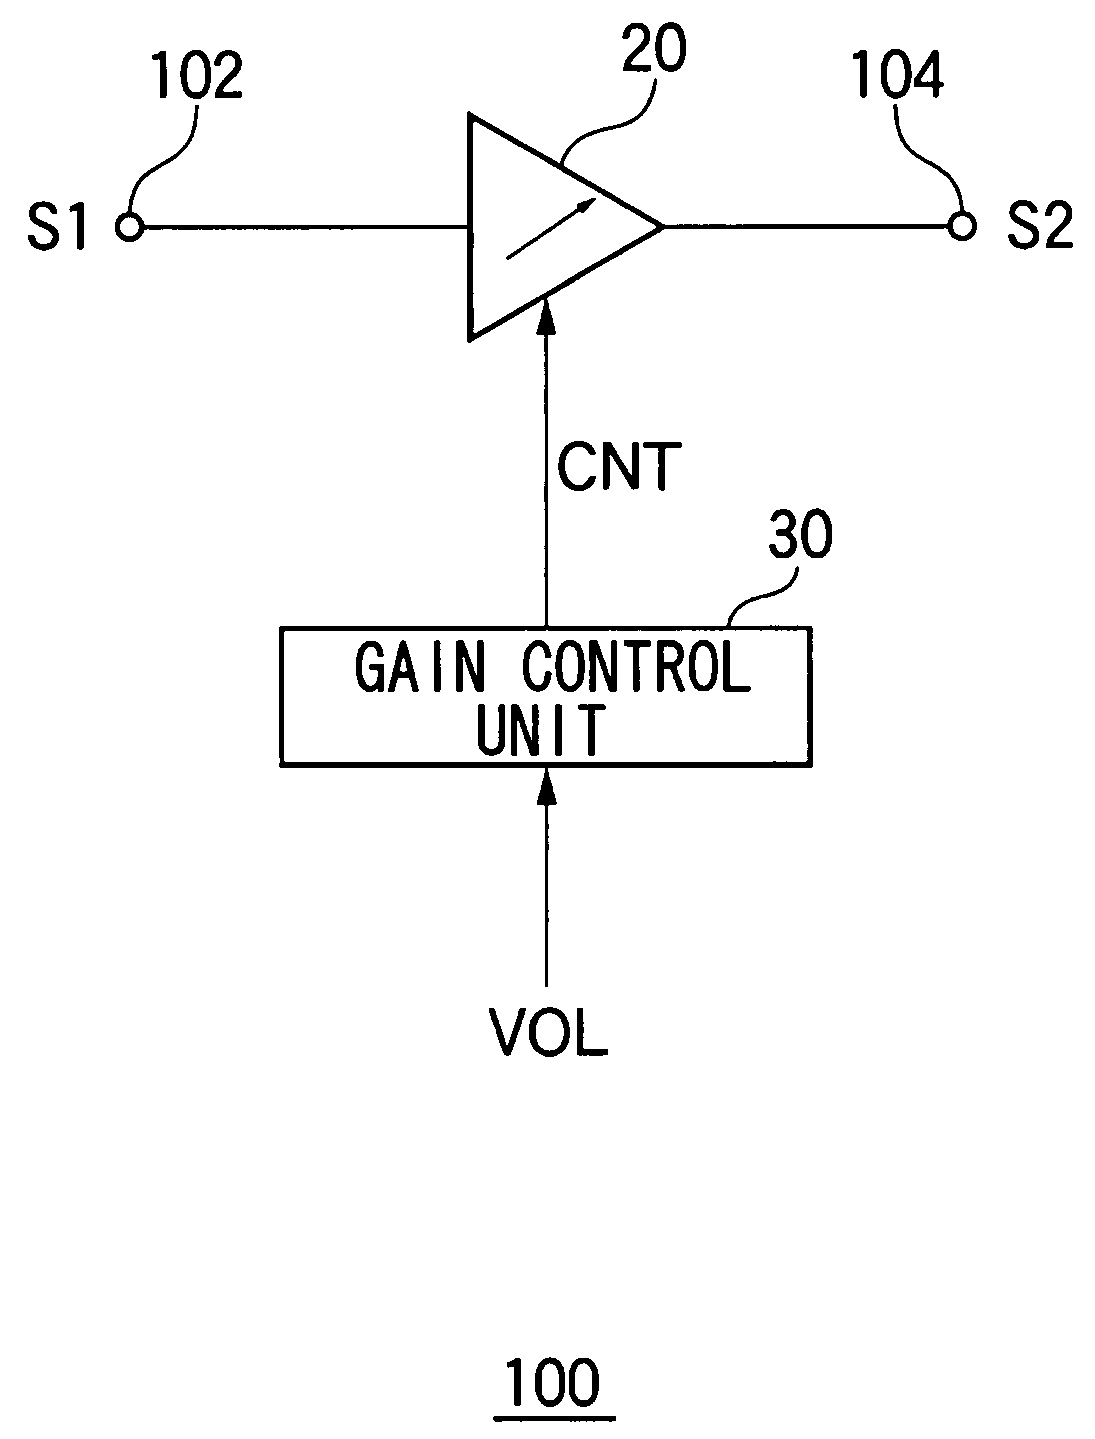 Electronic volume apparatus